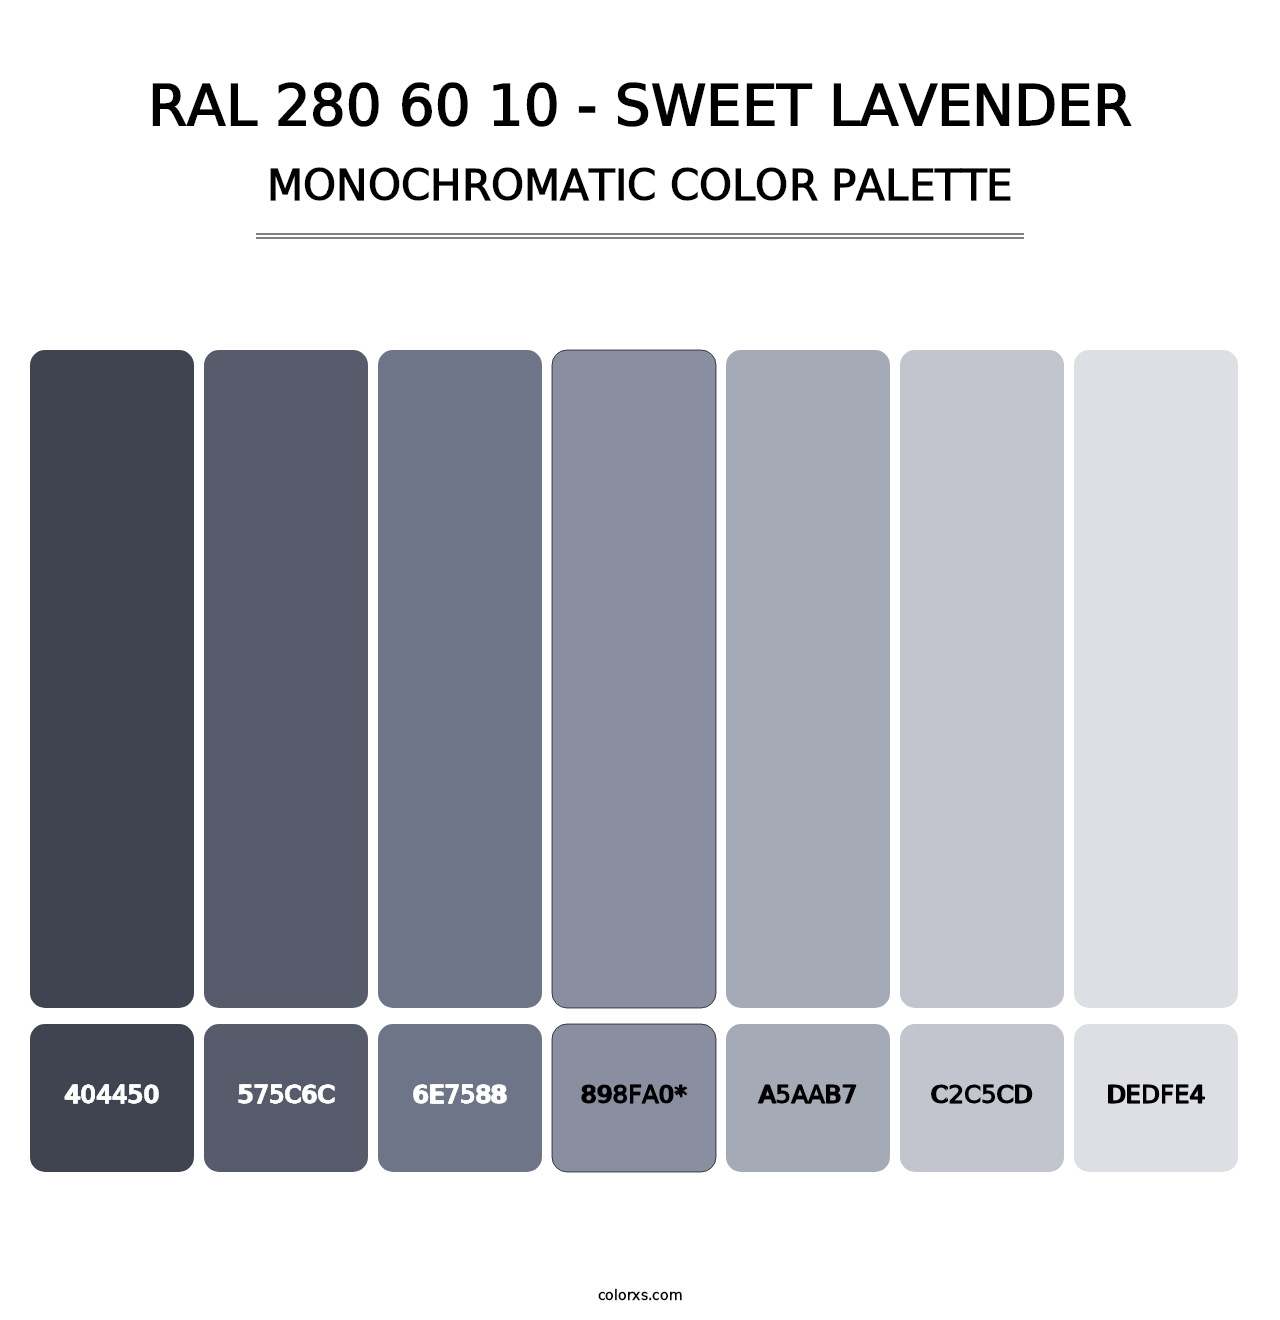 RAL 280 60 10 - Sweet Lavender - Monochromatic Color Palette